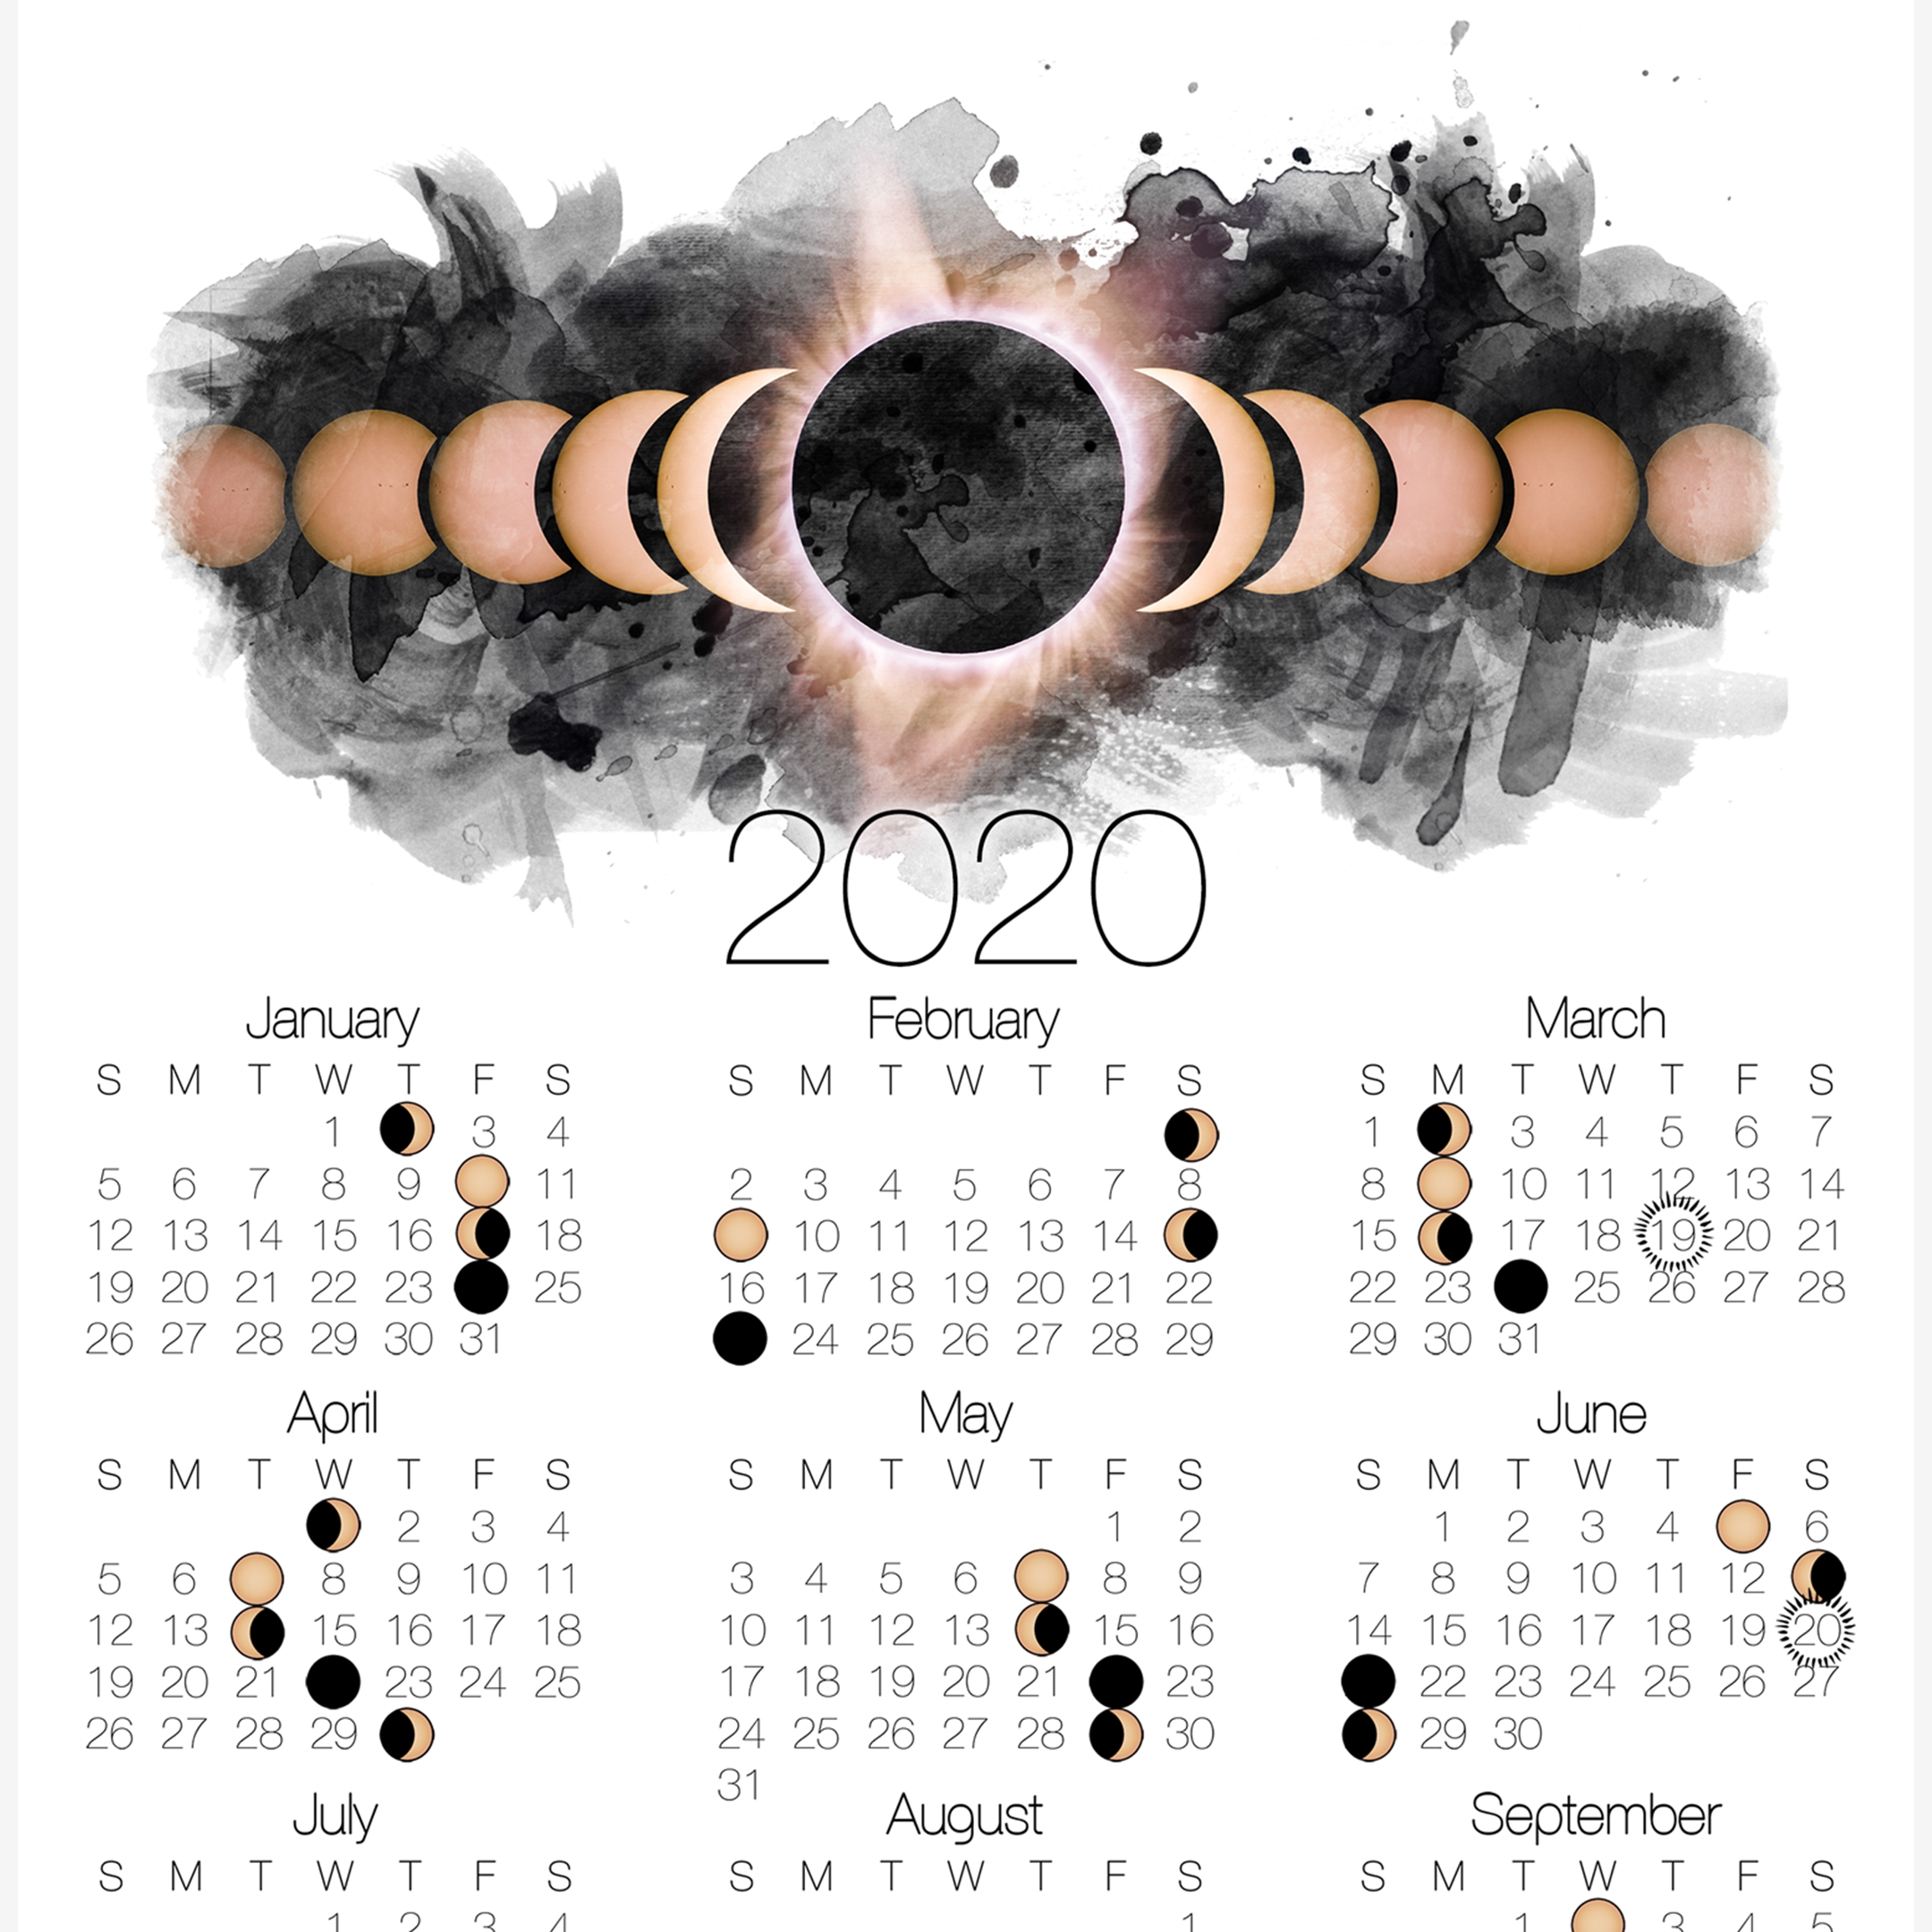 2020 moon phase calendar lunar calendar with solar eclipse